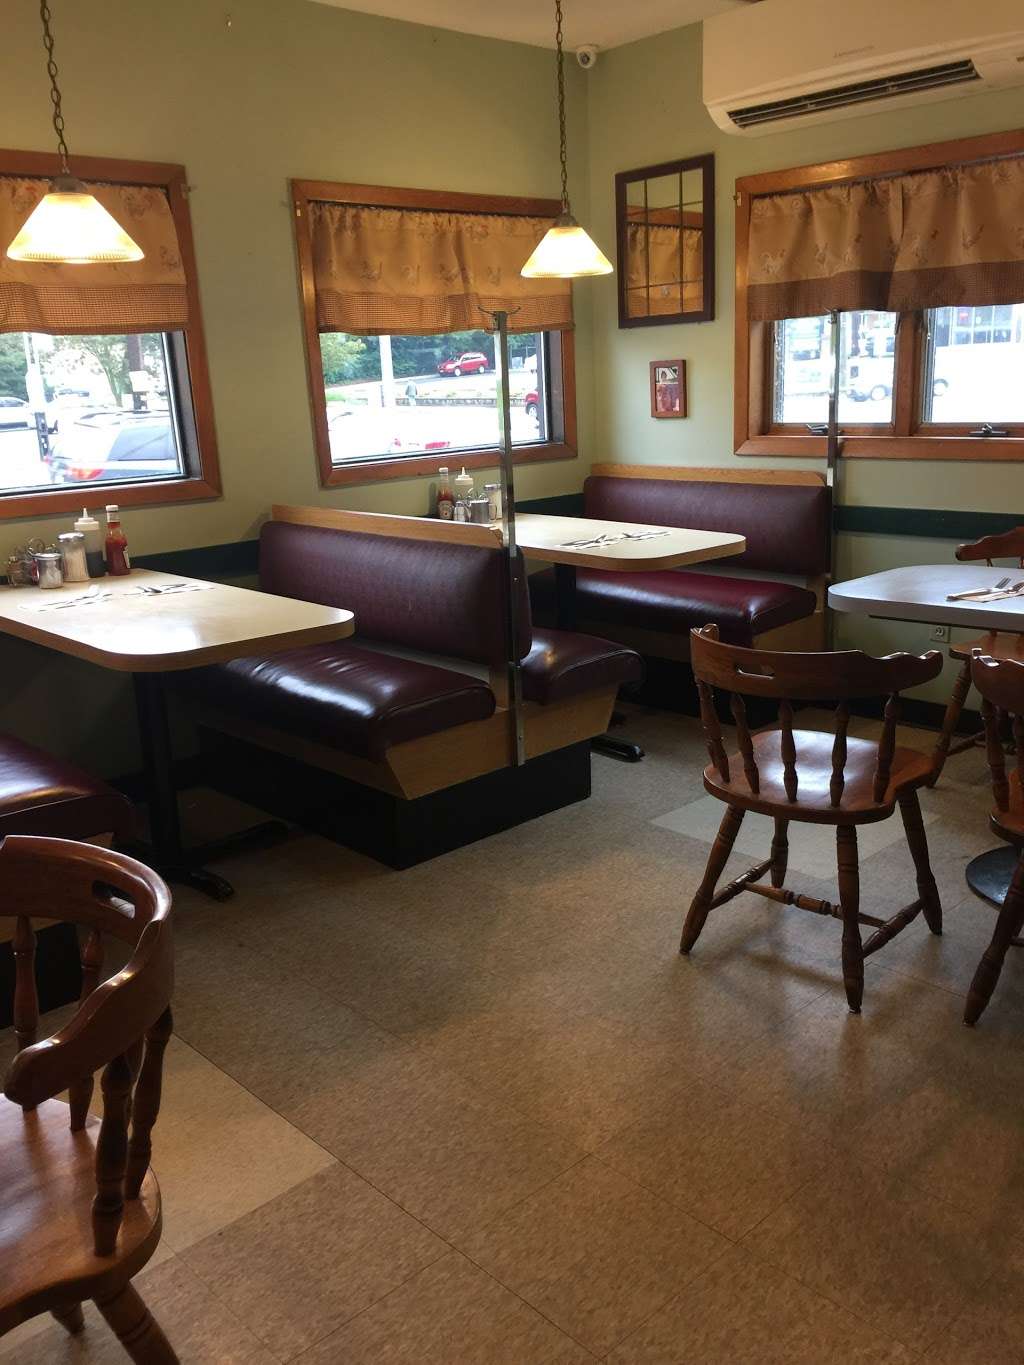 Sparkys Diner | 129 Ramapo Rd, Garnerville, NY 10923, USA | Phone: (845) 429-8880